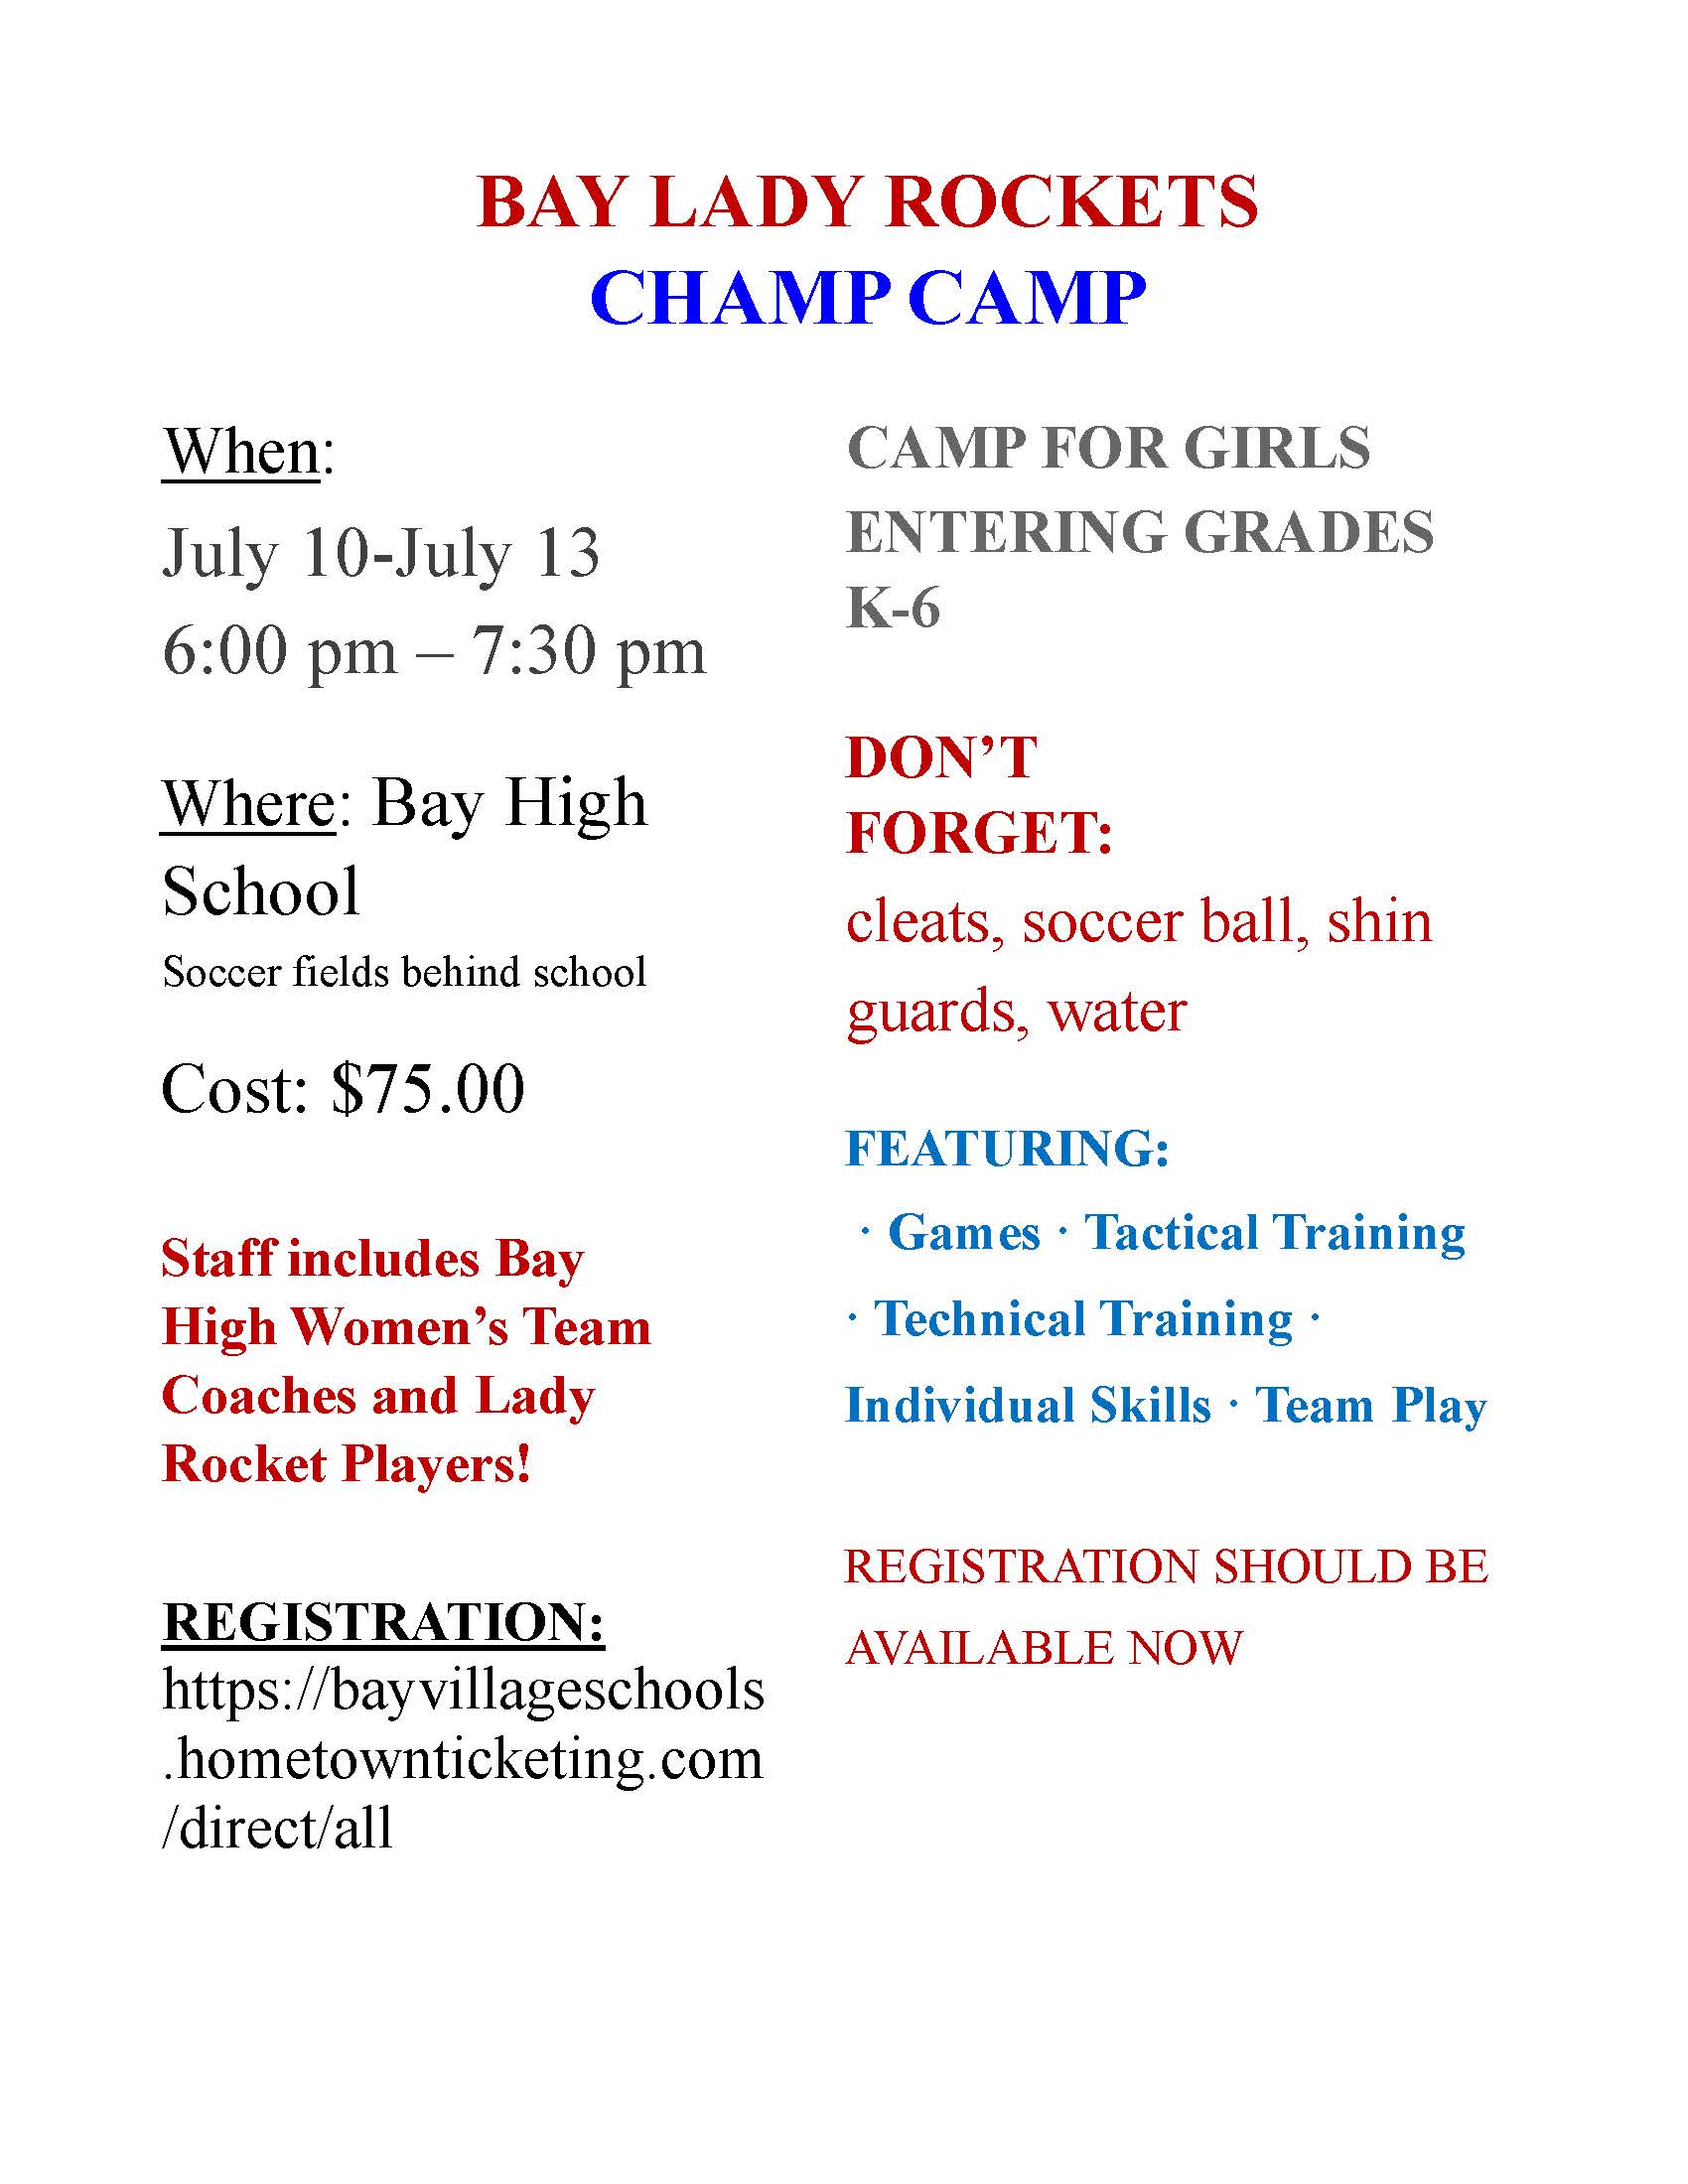 Champ Camp Flyer